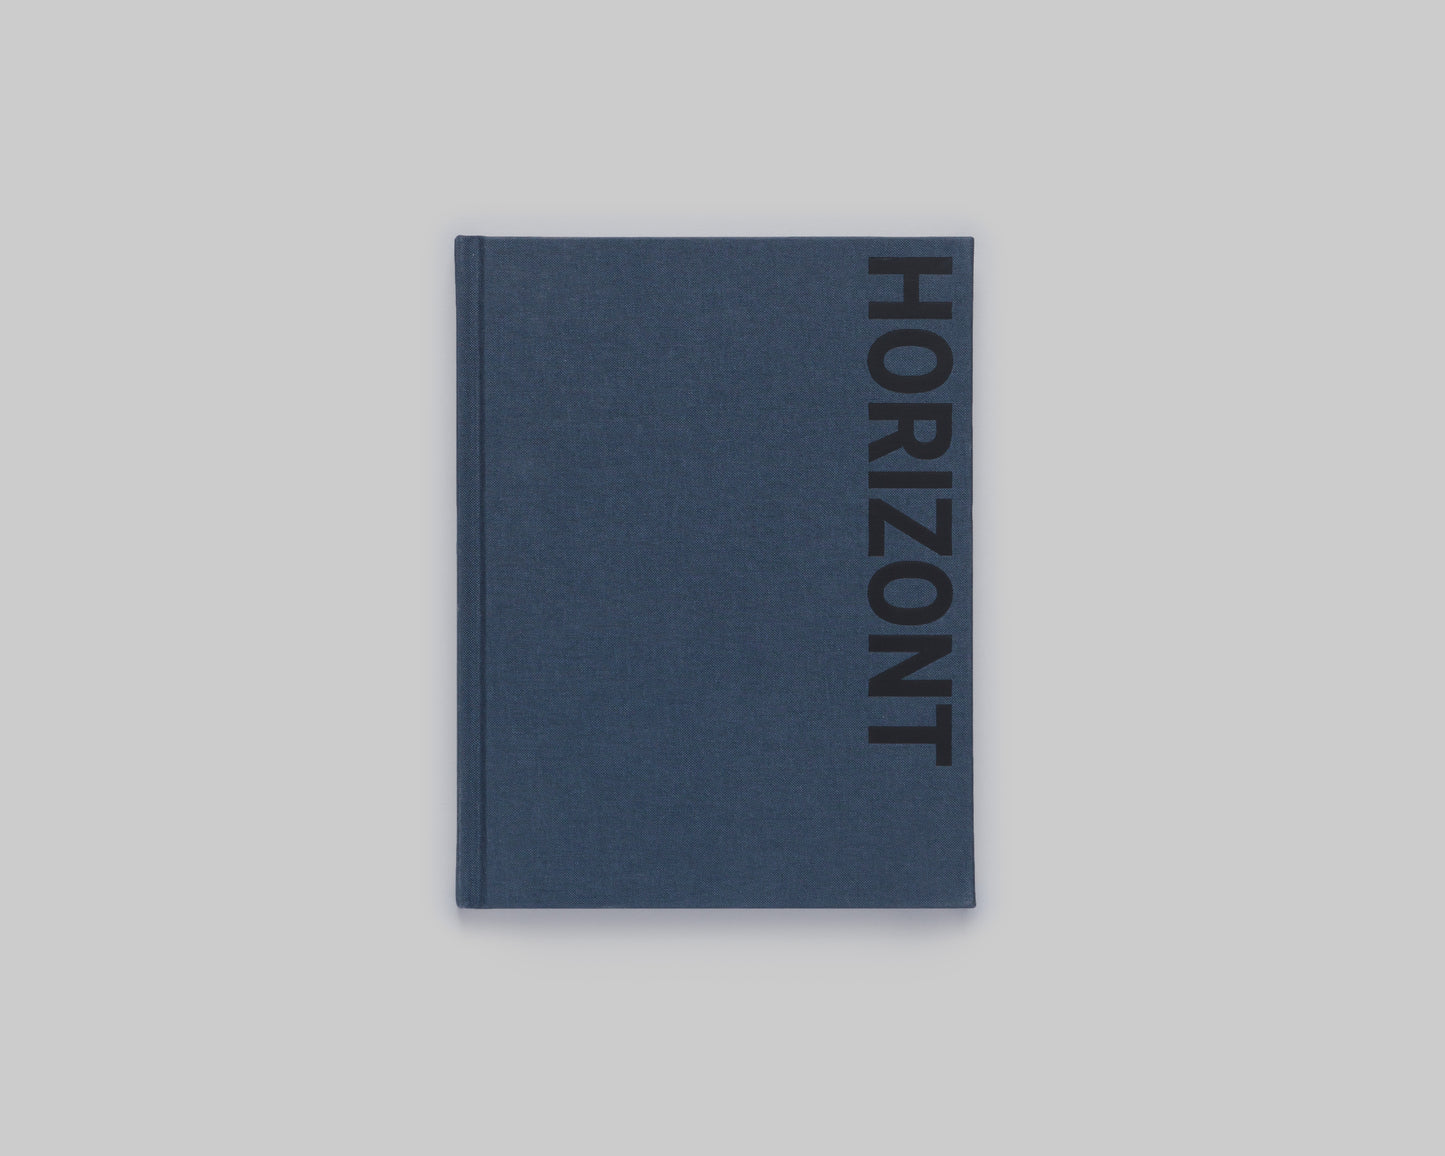 HORIZONT / Michael Ashkin